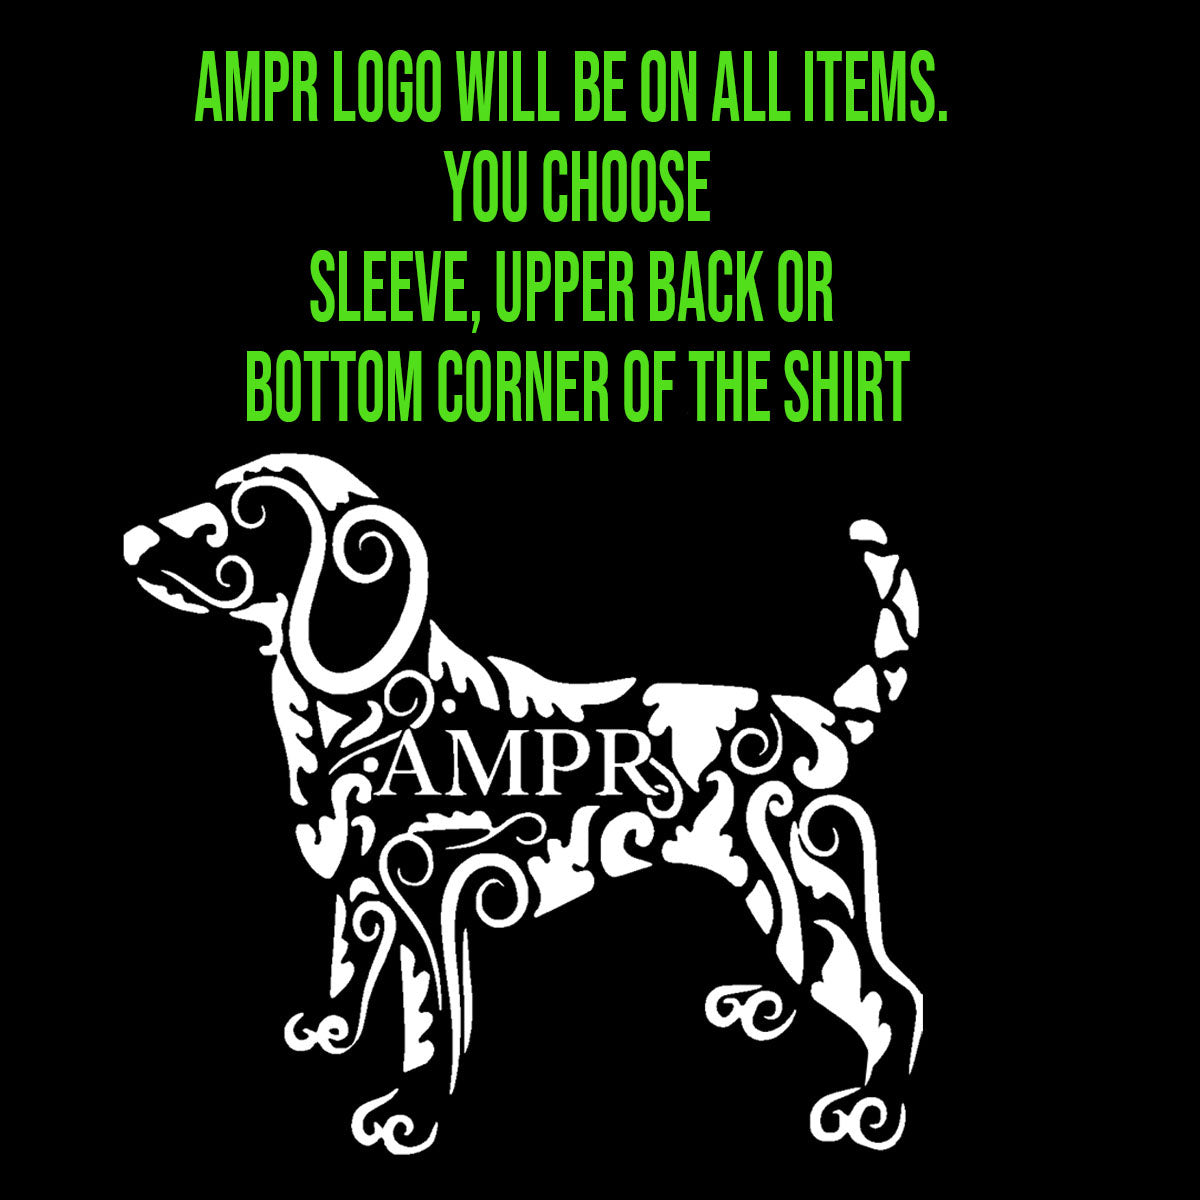 Ampr design 3 non hooded sweatshirt